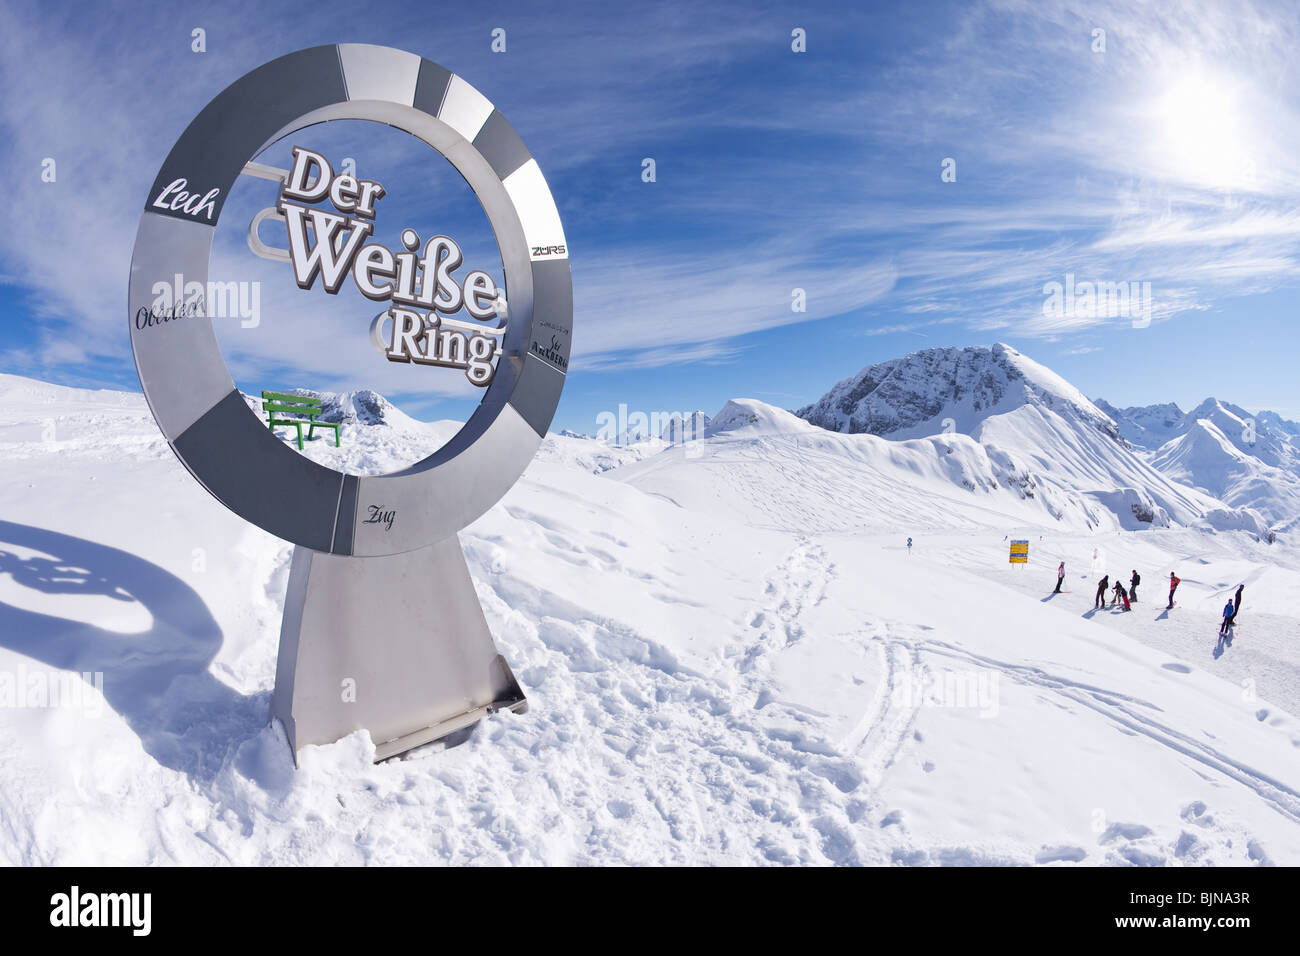 Der Weisse Ring Stubenbach Lech near St Saint Anton am Arlberg in winter snow Austrian Alps Austria Europe Stock Photo